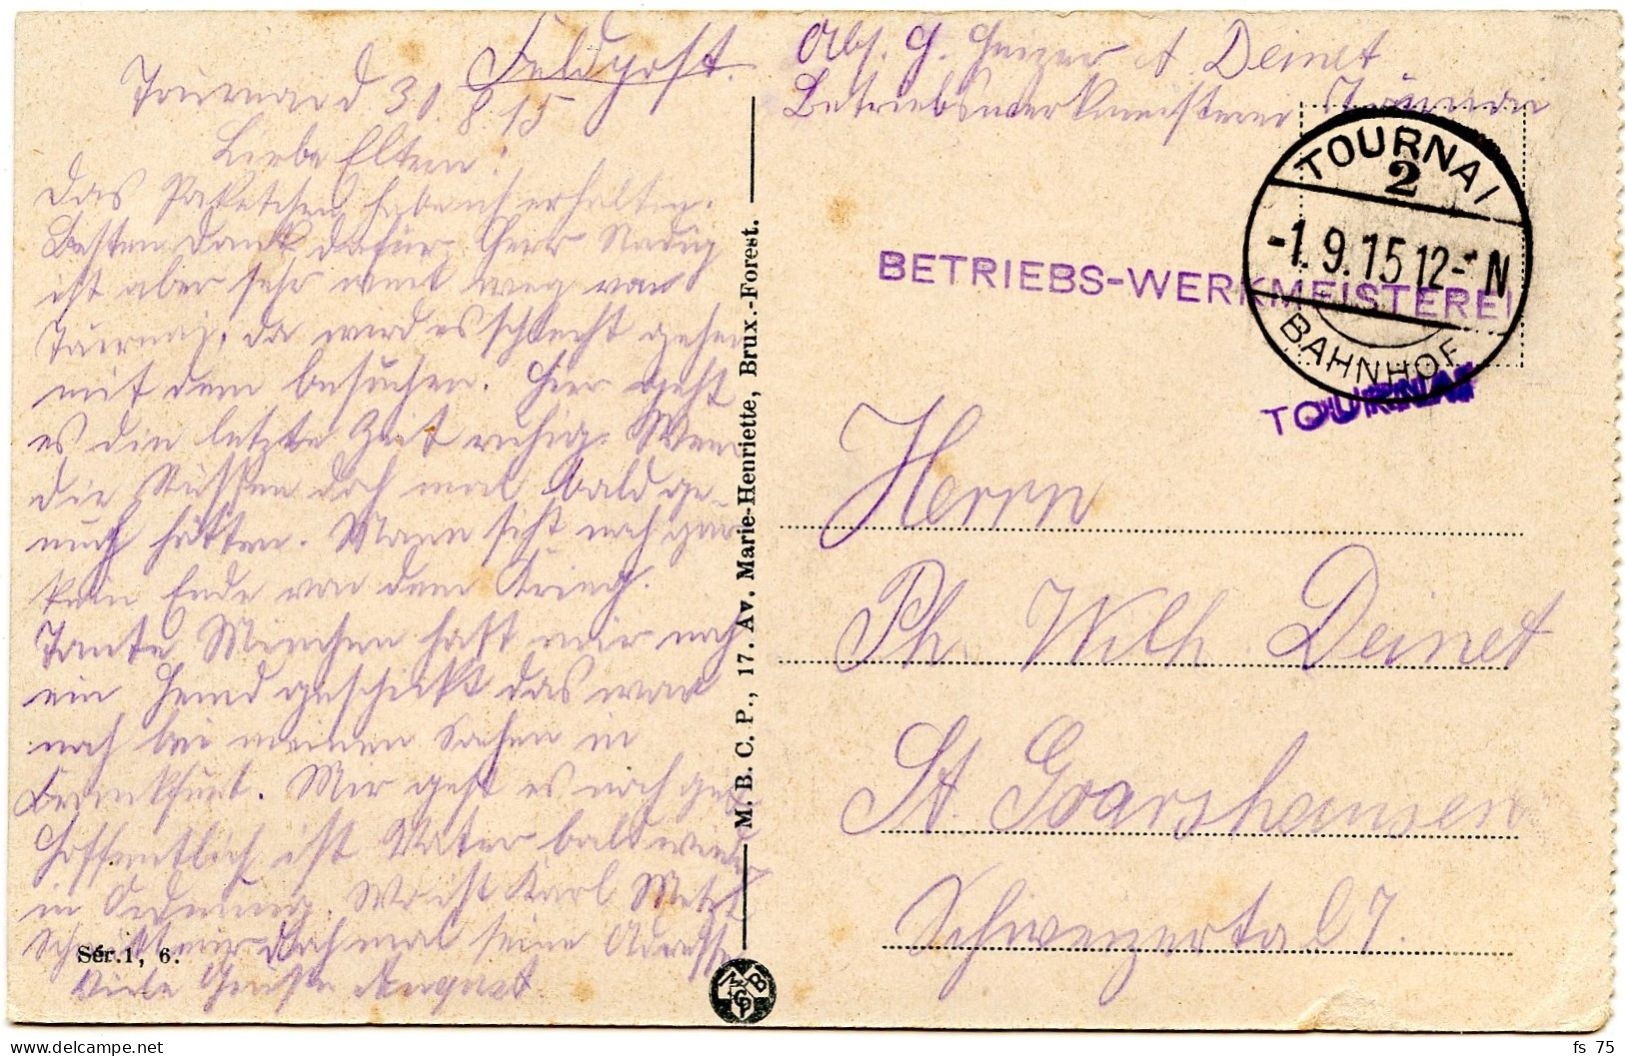 BELGIQUE - TOURNAI + BETRIEBS-WERKMEISTEREI TOURNAI SUR CARTE POSTALE, 1915 - Armée Allemande